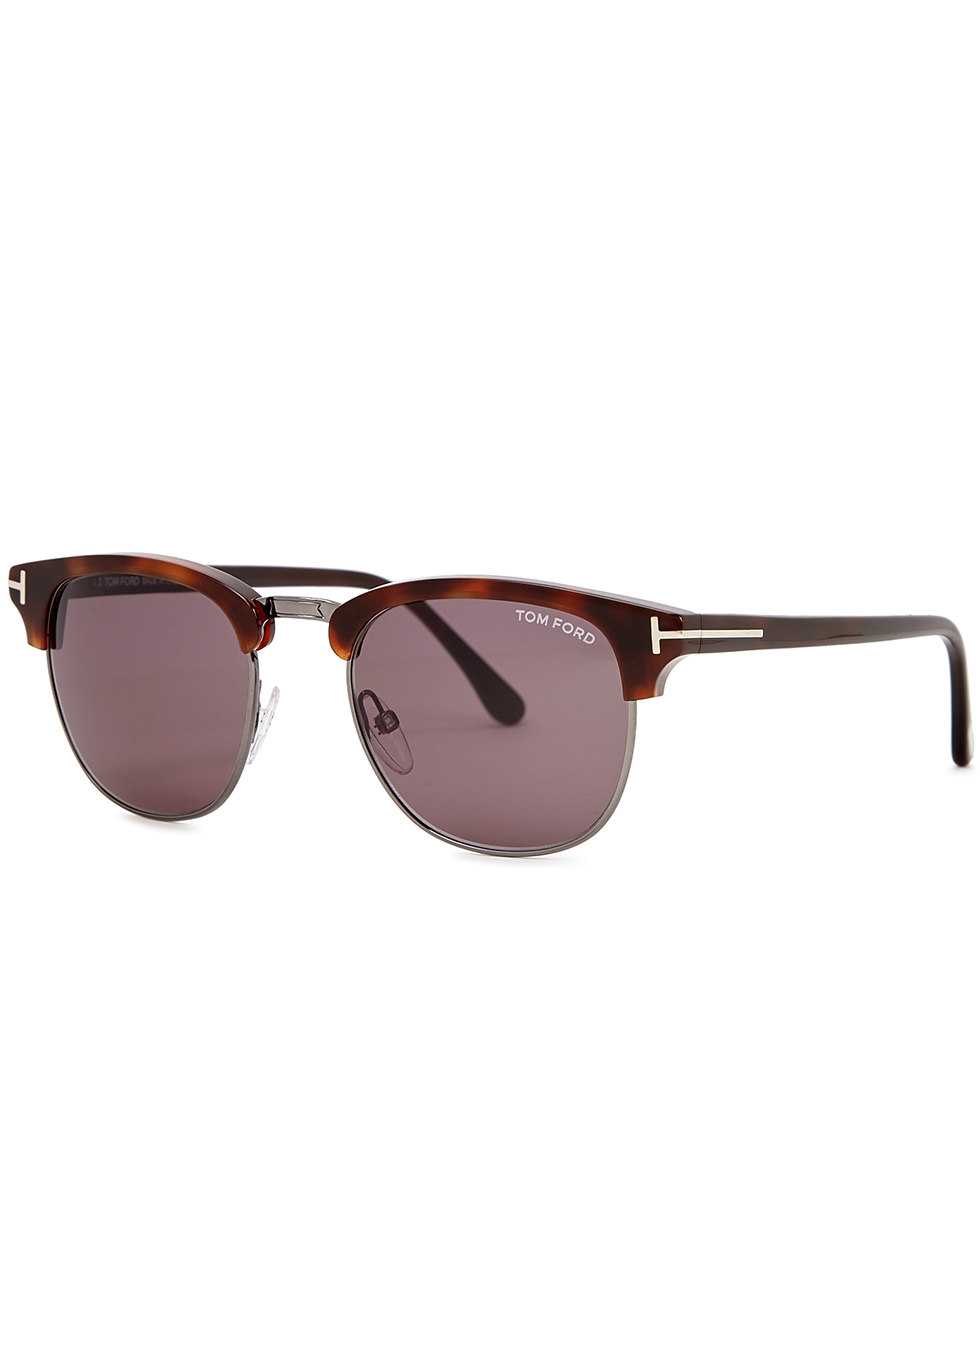 Tom Ford Tortoiseshell clubmaster-style sunglasses - Harvey Nichols